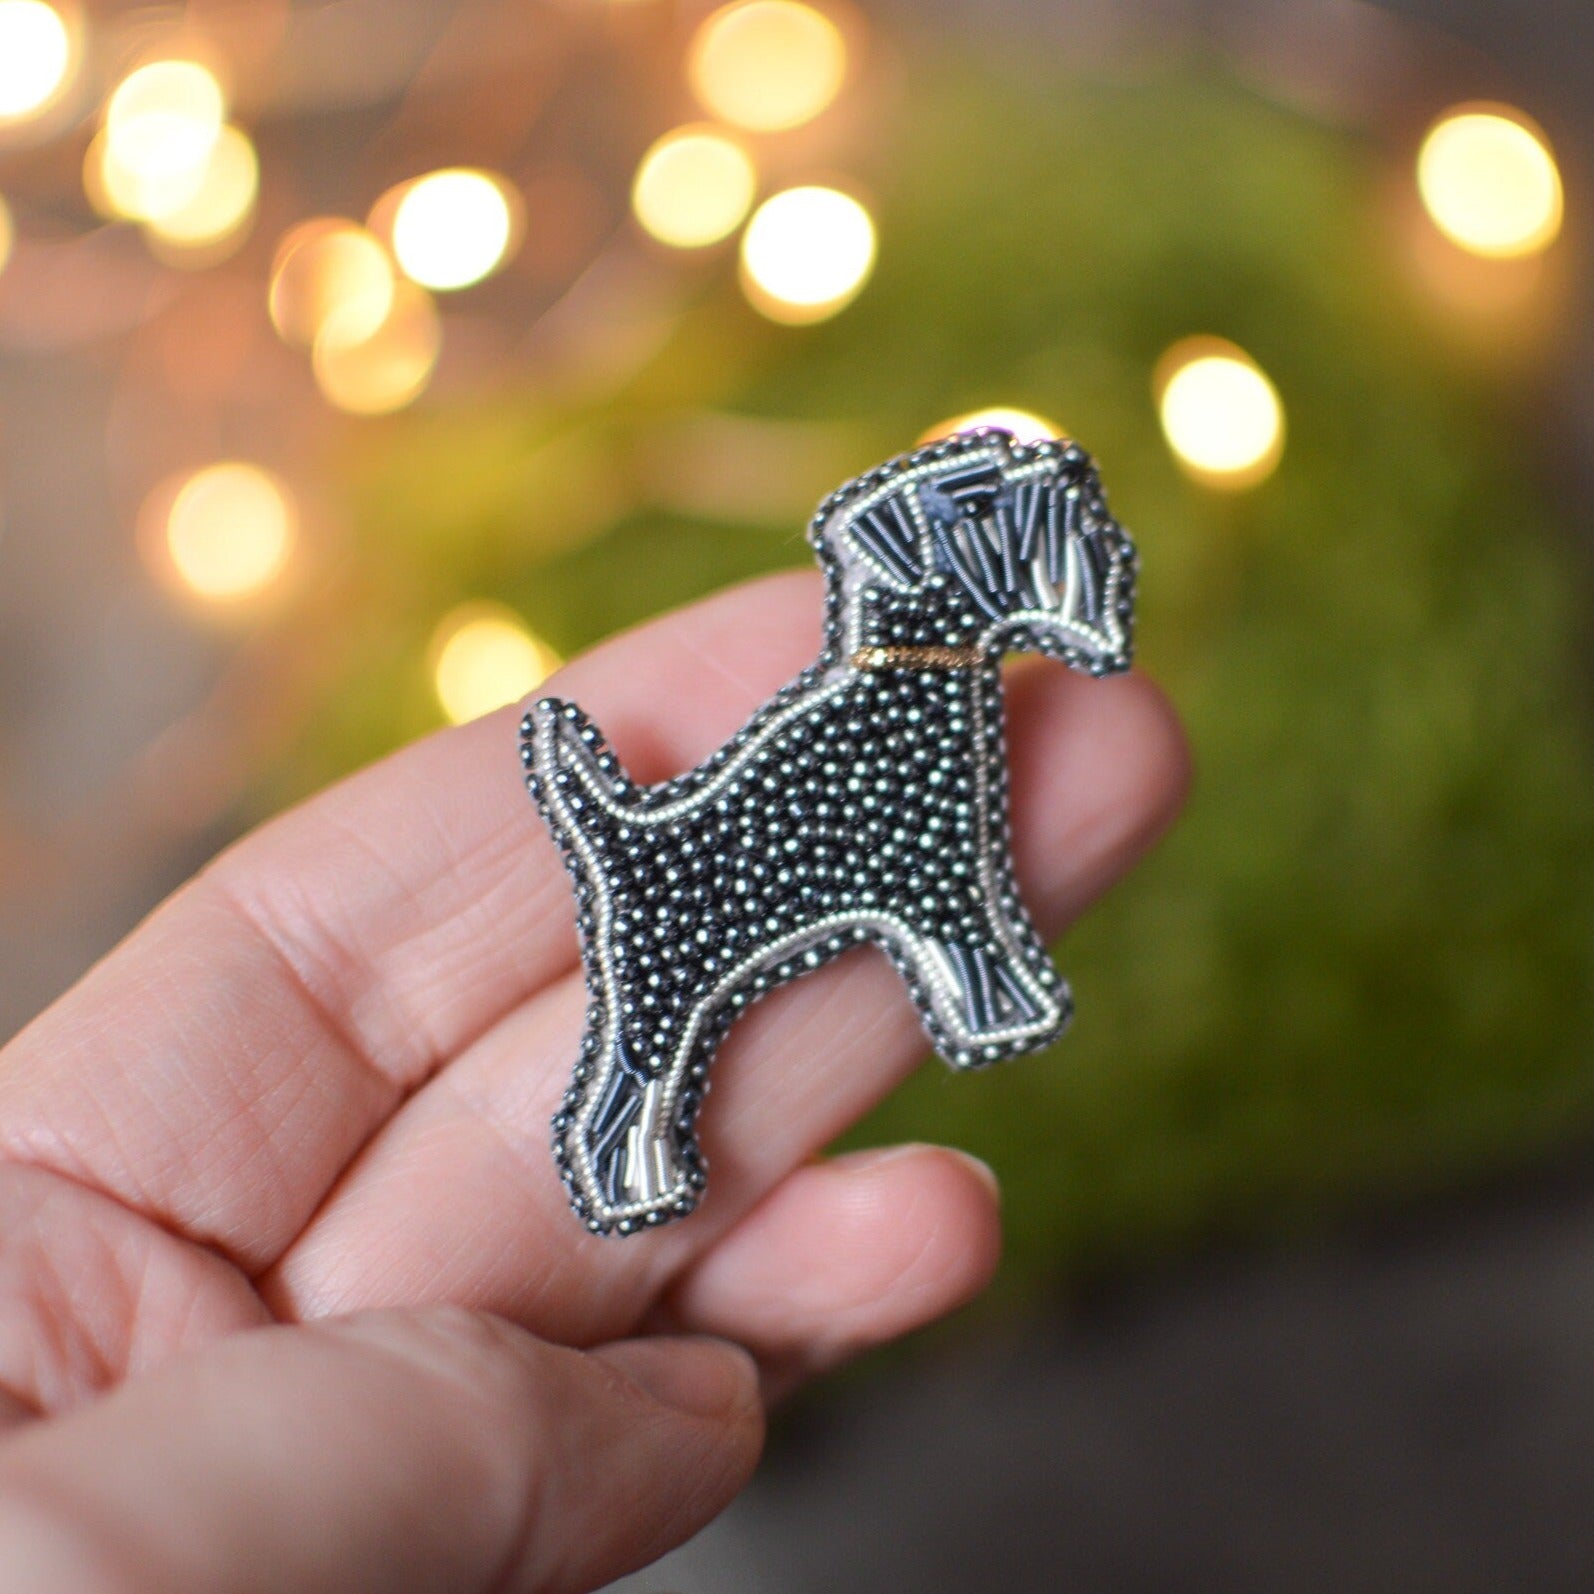 Schnauzer Embroidered Brooch, Miniature Black Schnauzer Pin Gift for Pet Mum